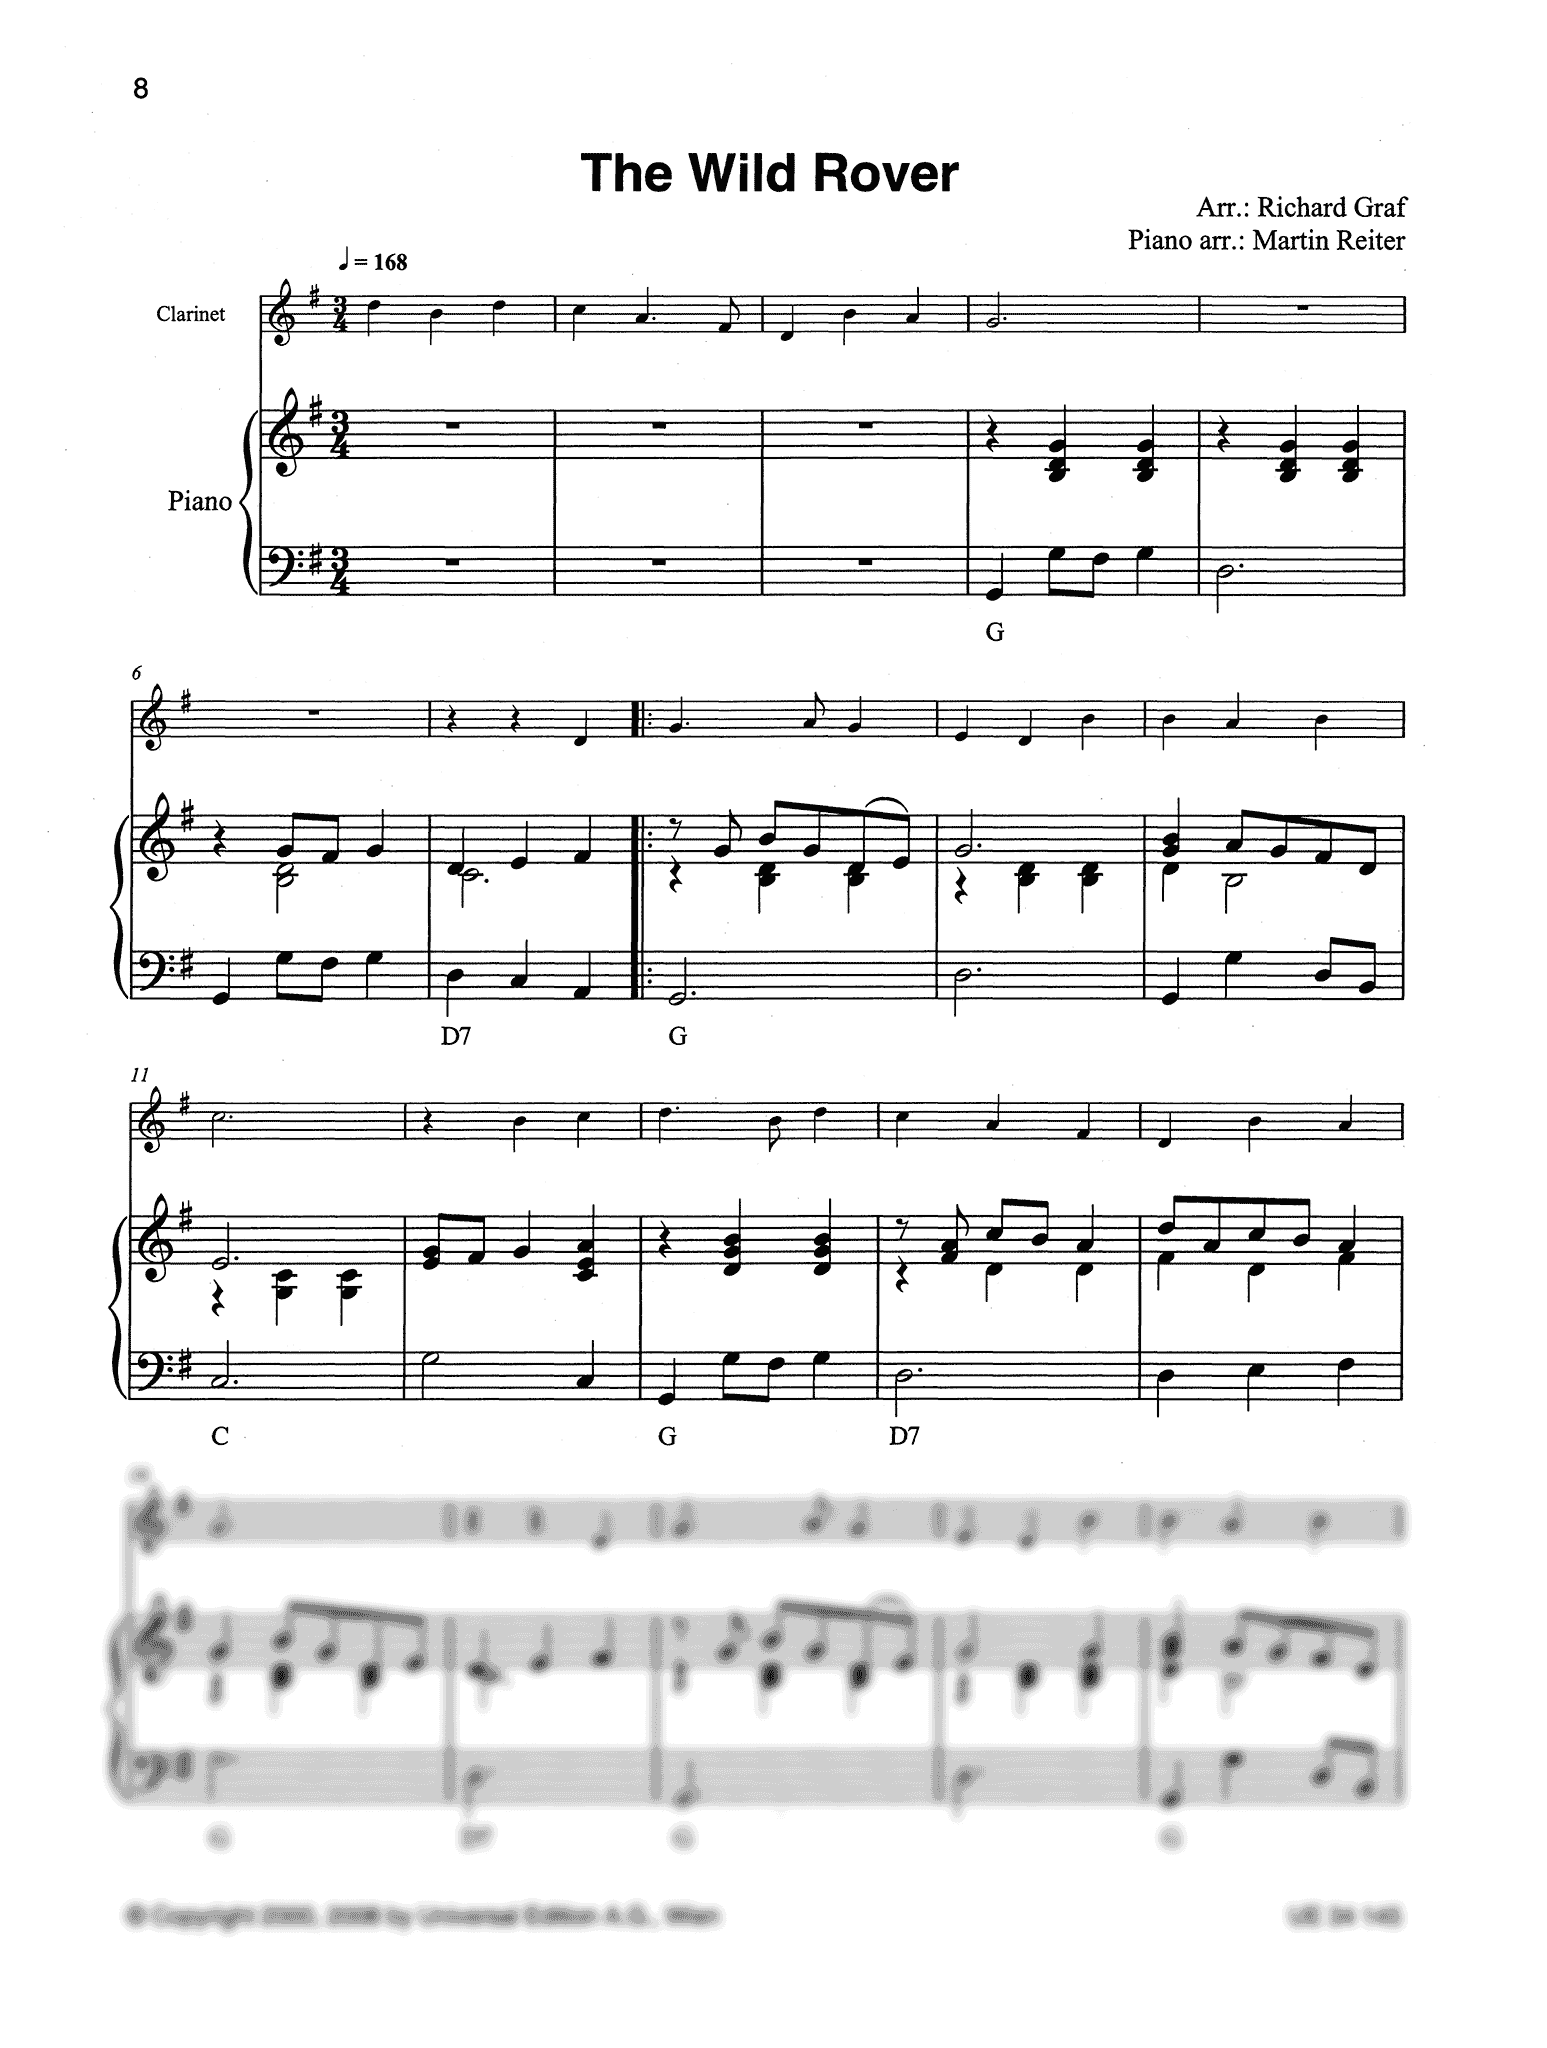 The Wild Rover clarinet and piano score